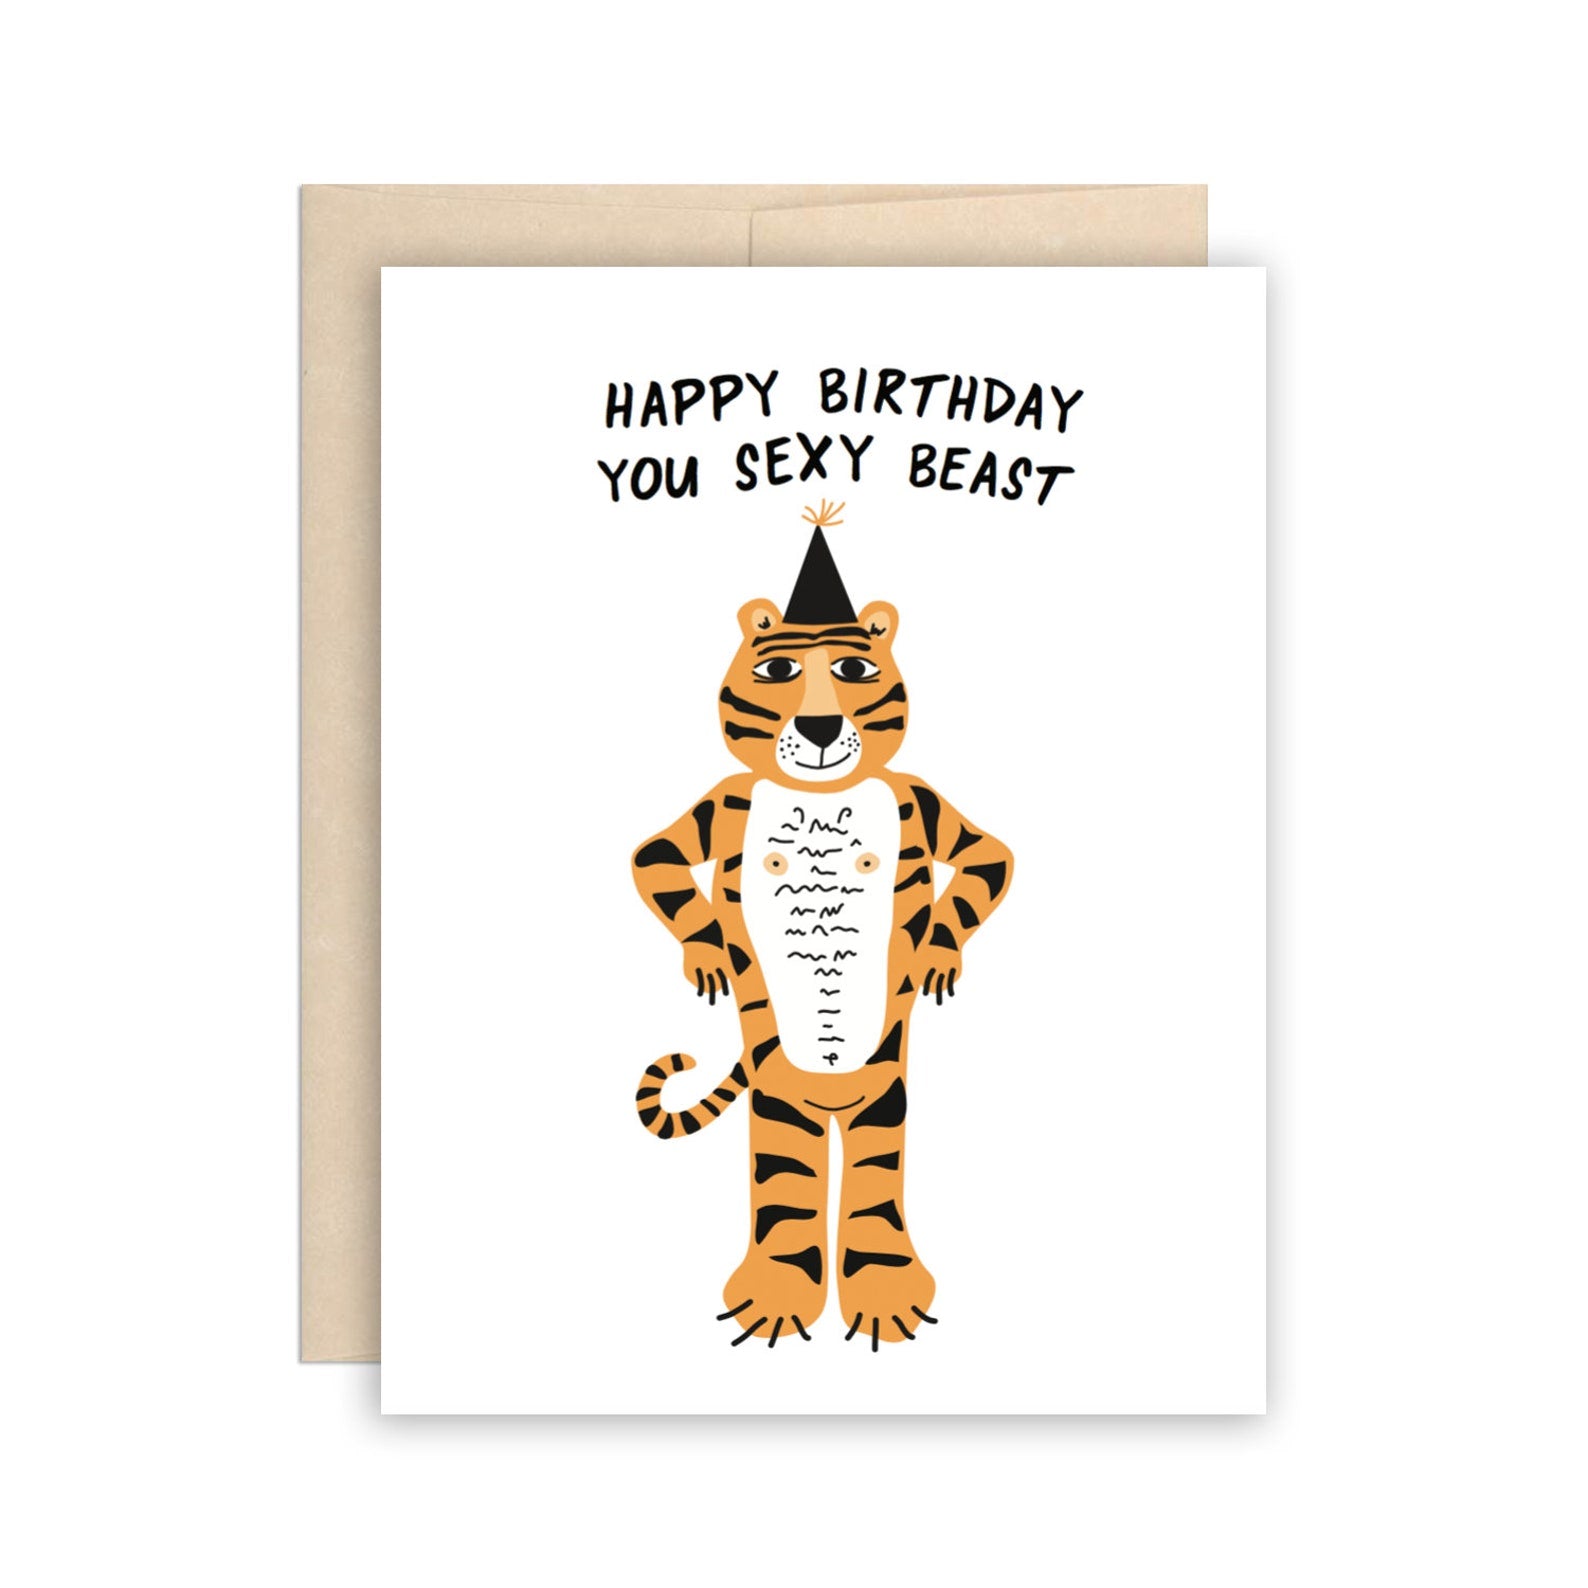 Happy Birthday you sexy beast Greeting Card